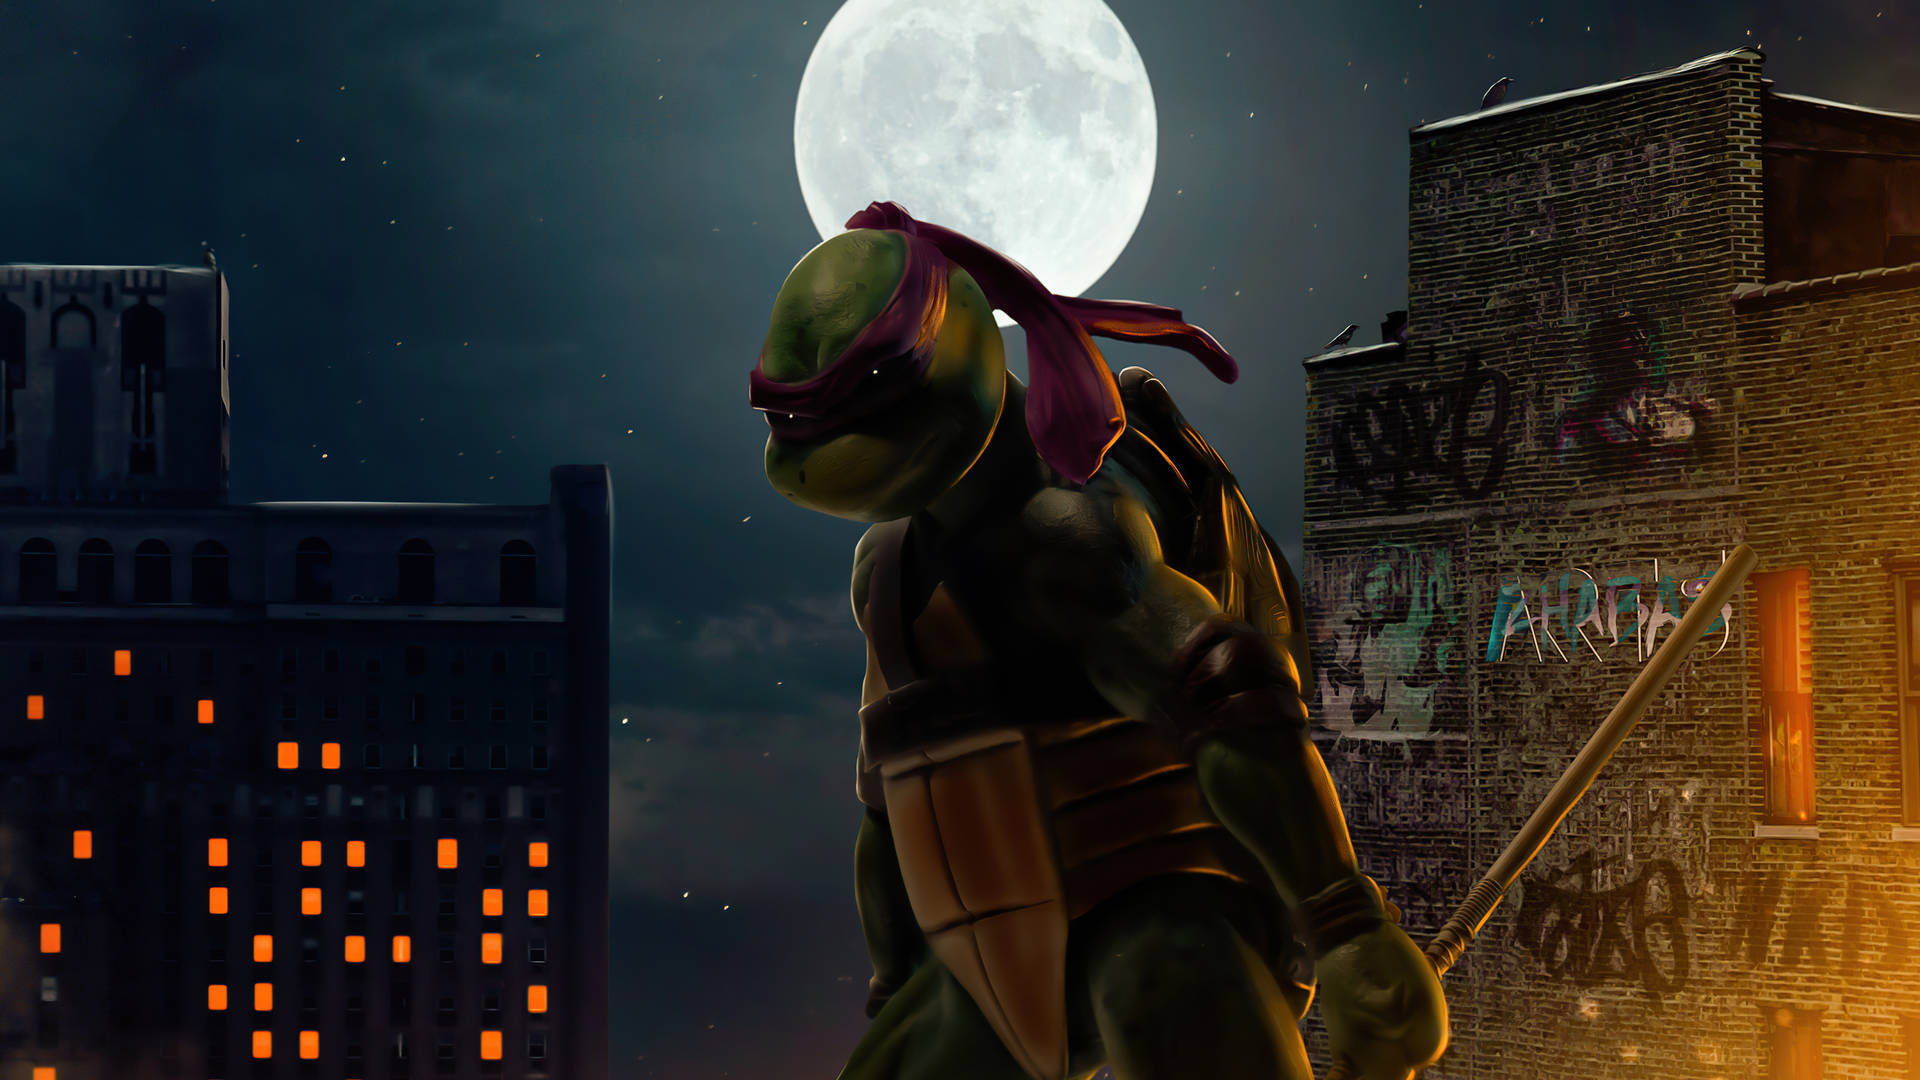 Lastortugas Ninja Adolescentes Mutantes Donatello Y La Luna. Fondo de pantalla